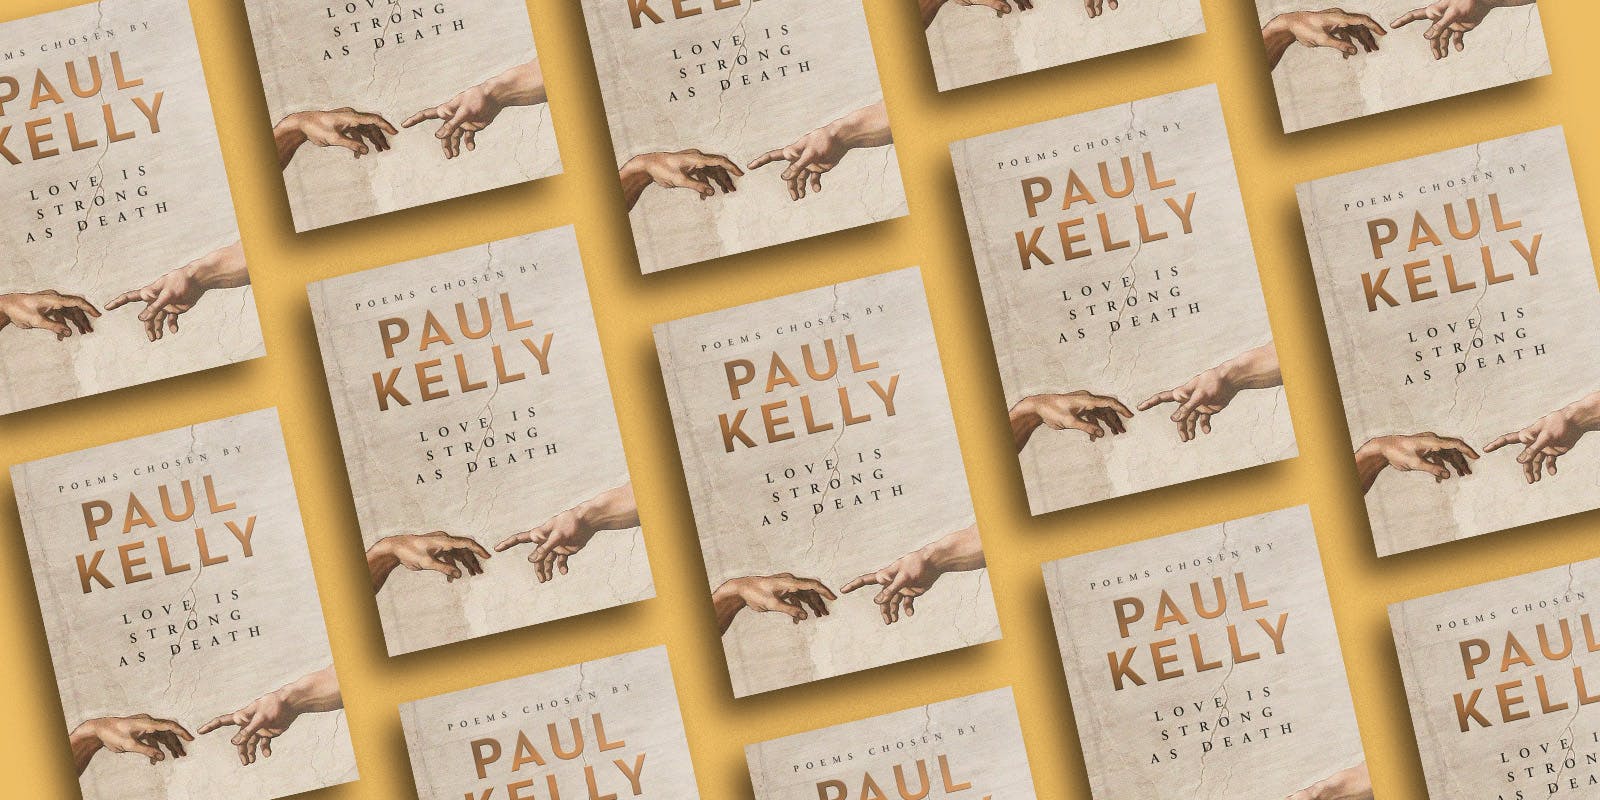 Paul Kelly Q&A